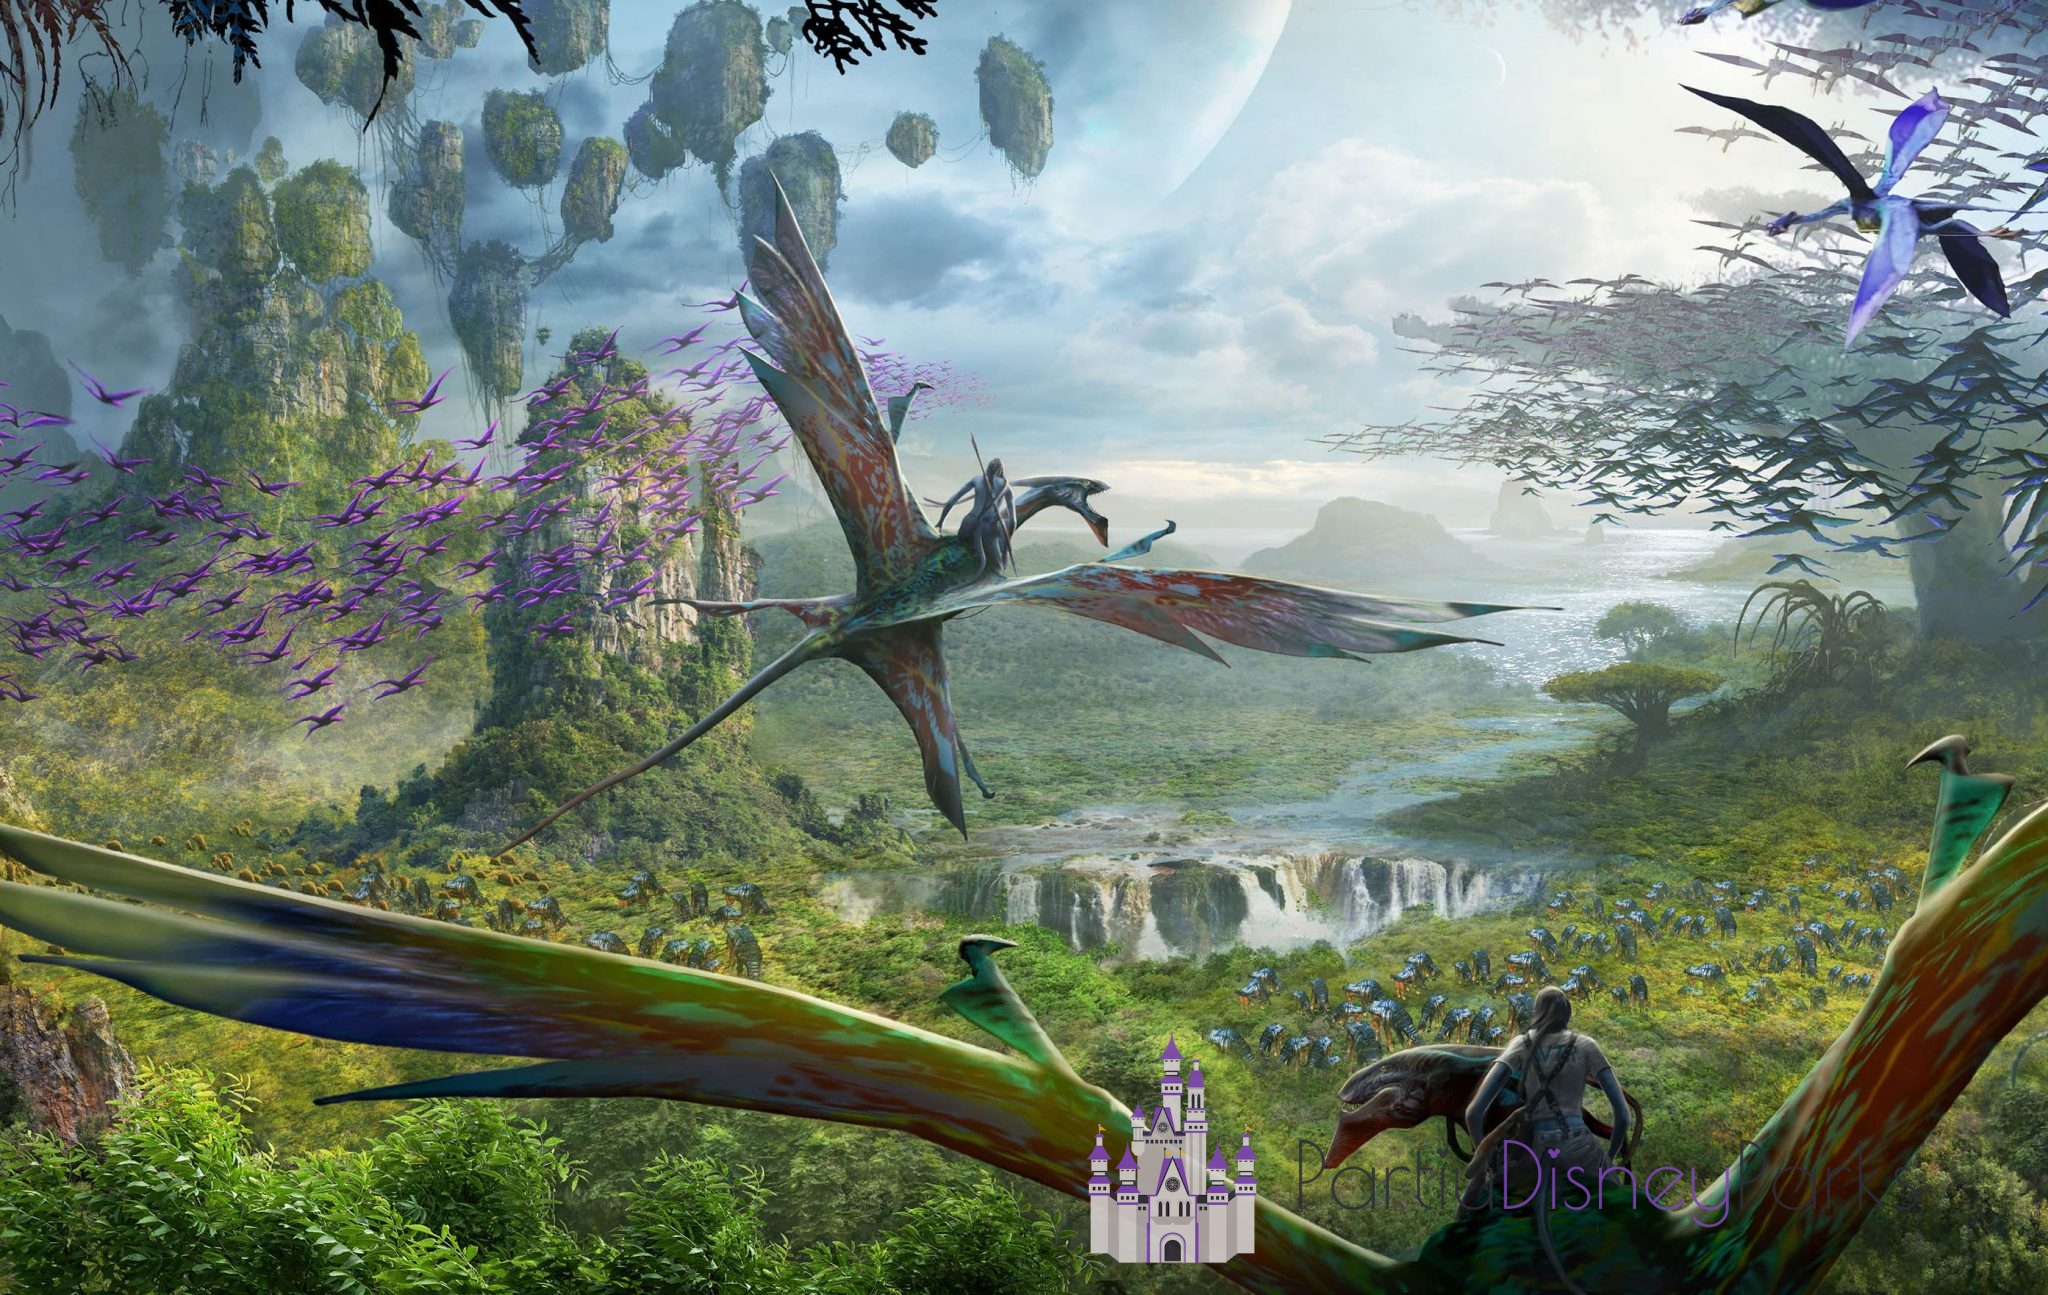 Avatar Flight of Passage-Attraktion auf Pandora im Animal Kingdom